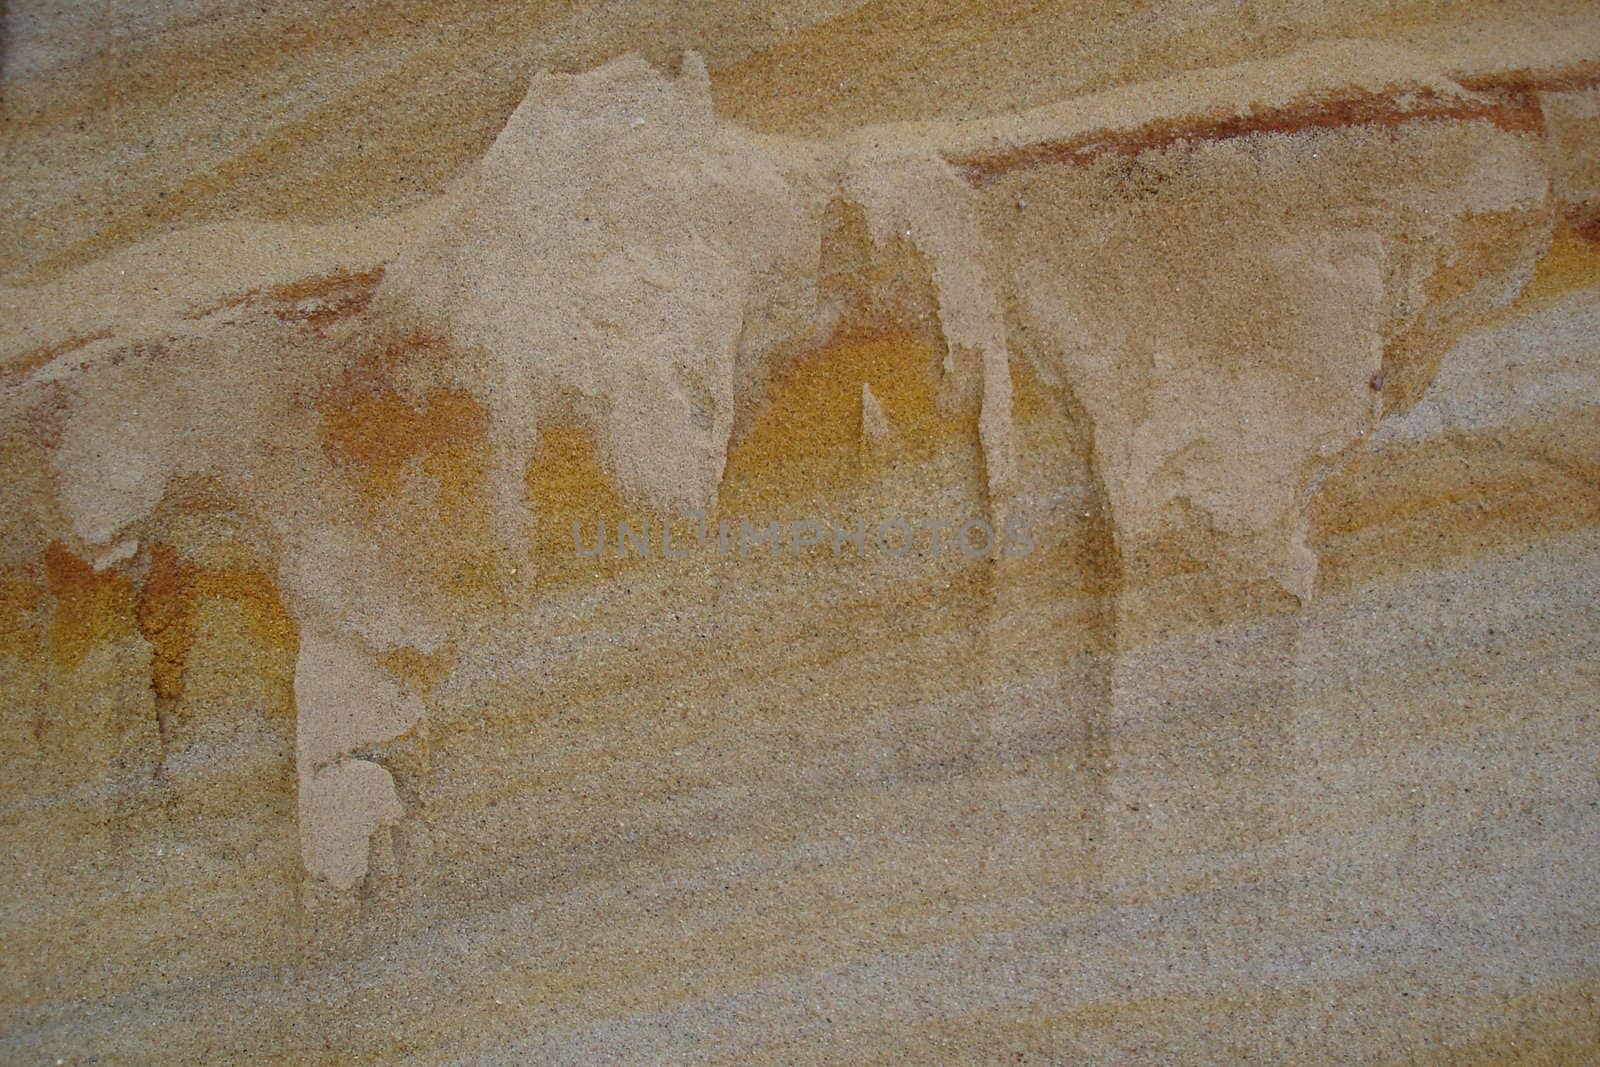                      Sand background          